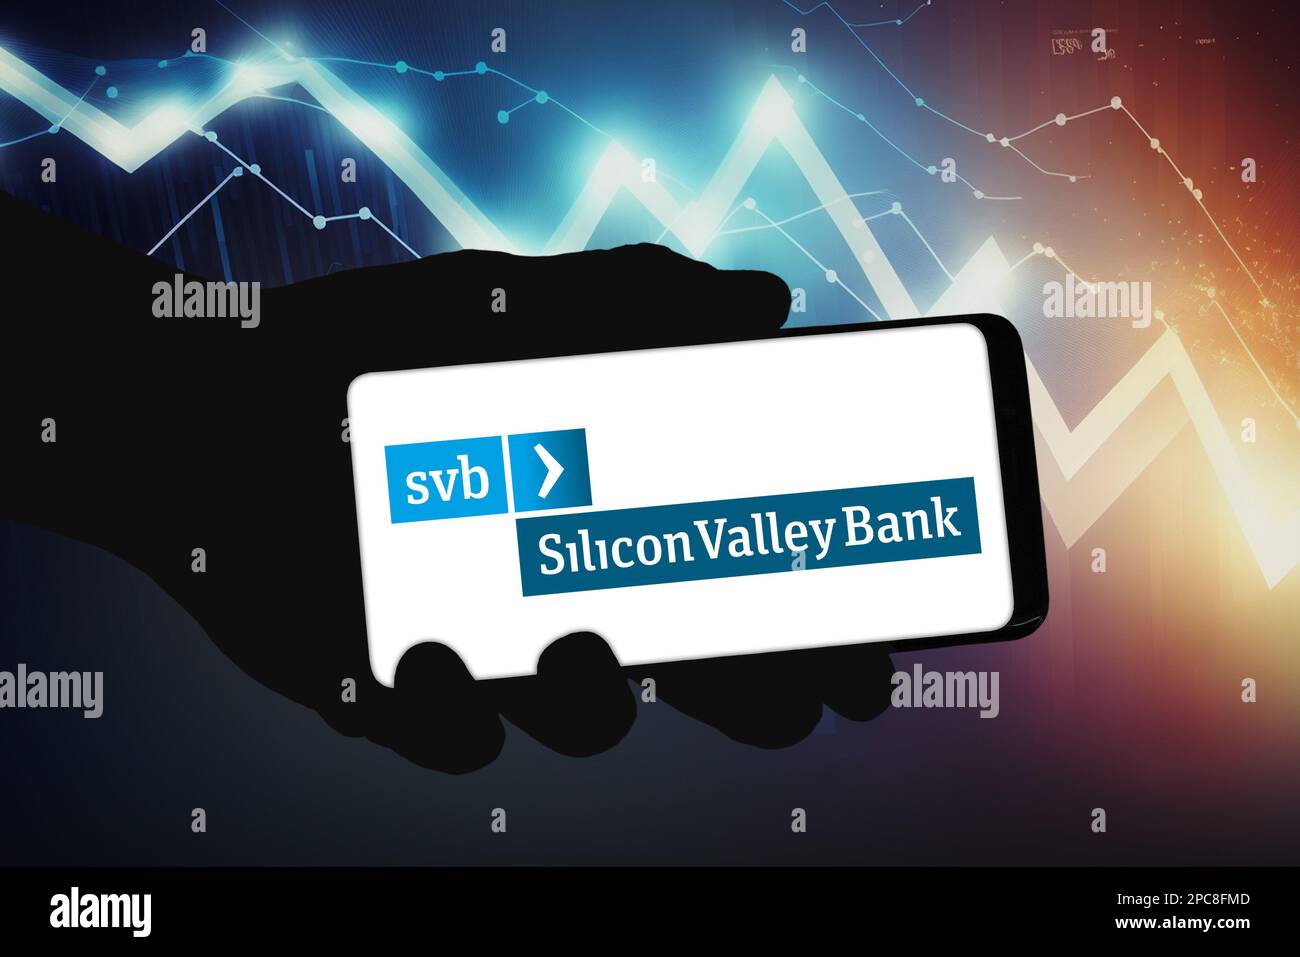 Silicon Valley Bank SVB - smartphone application Stock Photo